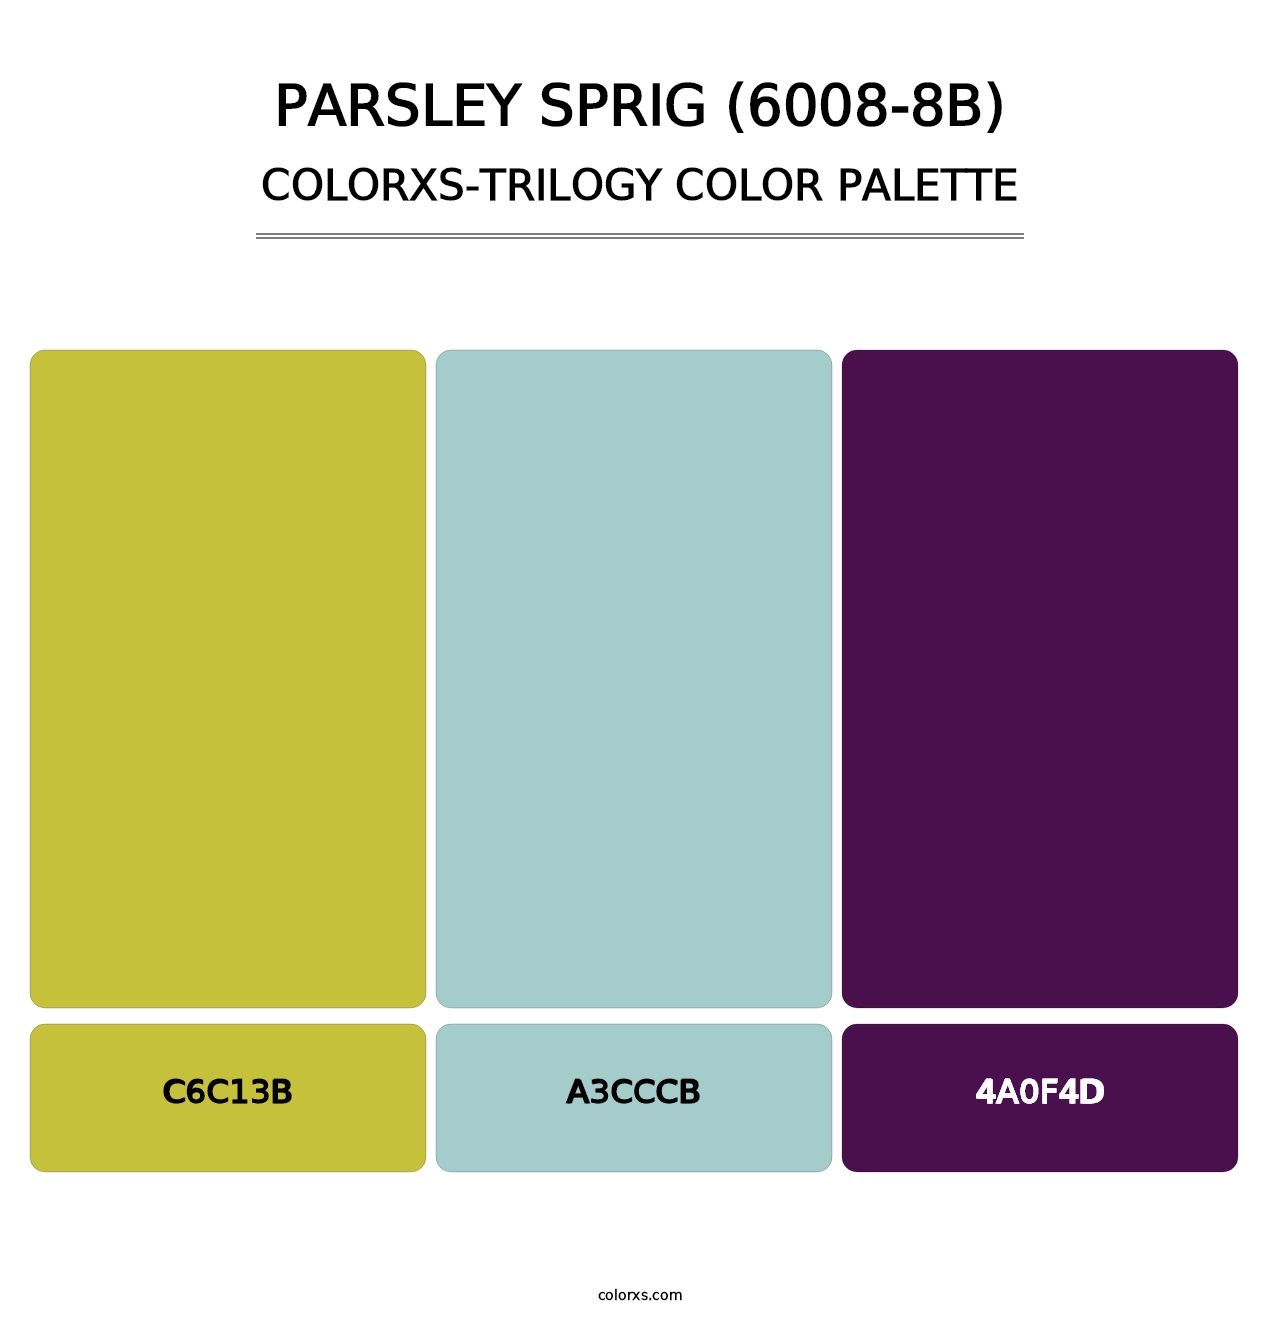 Parsley Sprig (6008-8B) - Colorxs Trilogy Palette